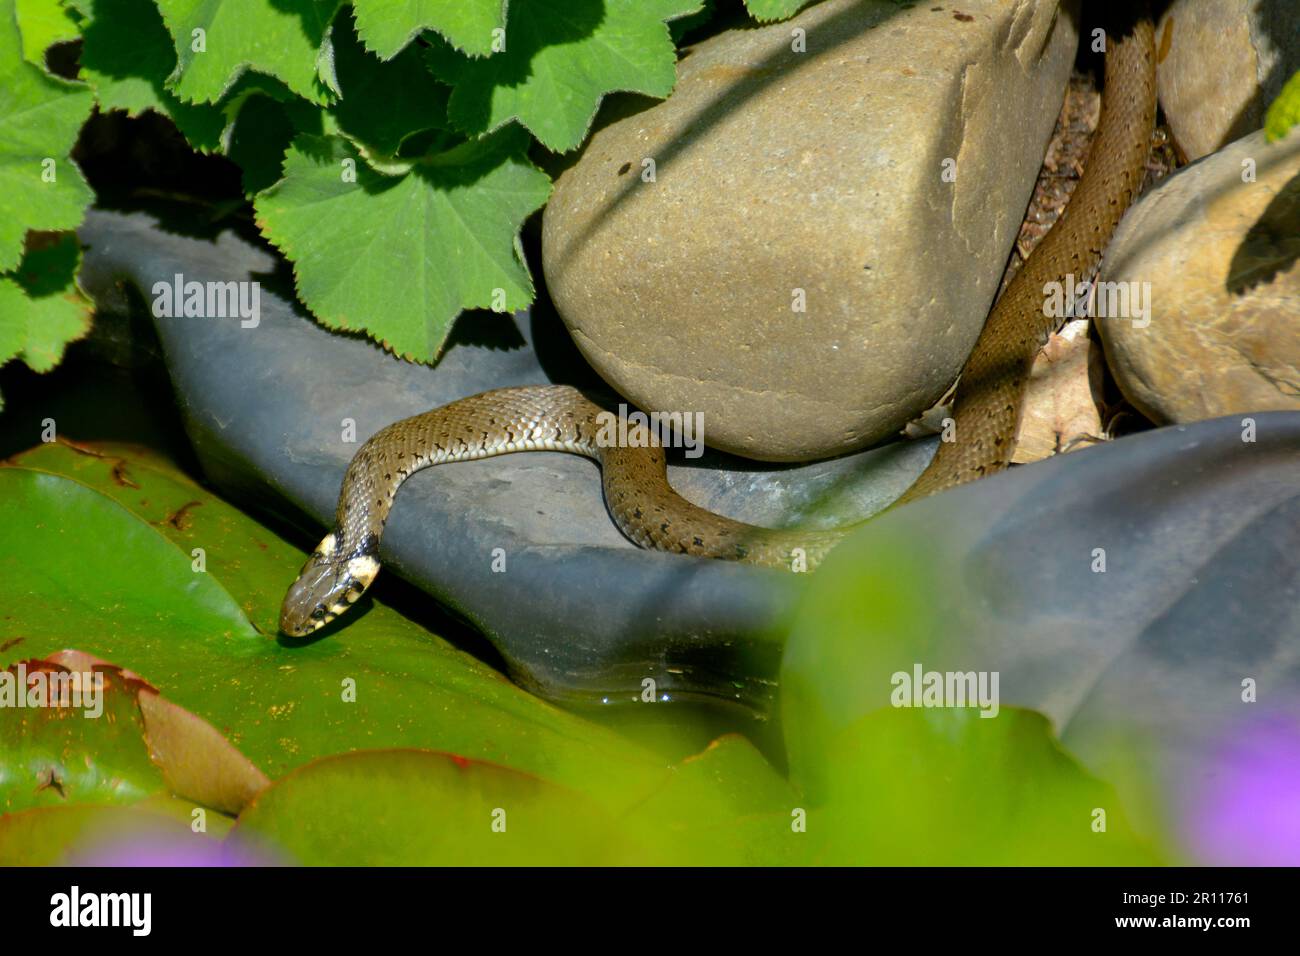 Serpent : serpent à herbe (Natrix natrix) au bassin du jardin Banque D'Images